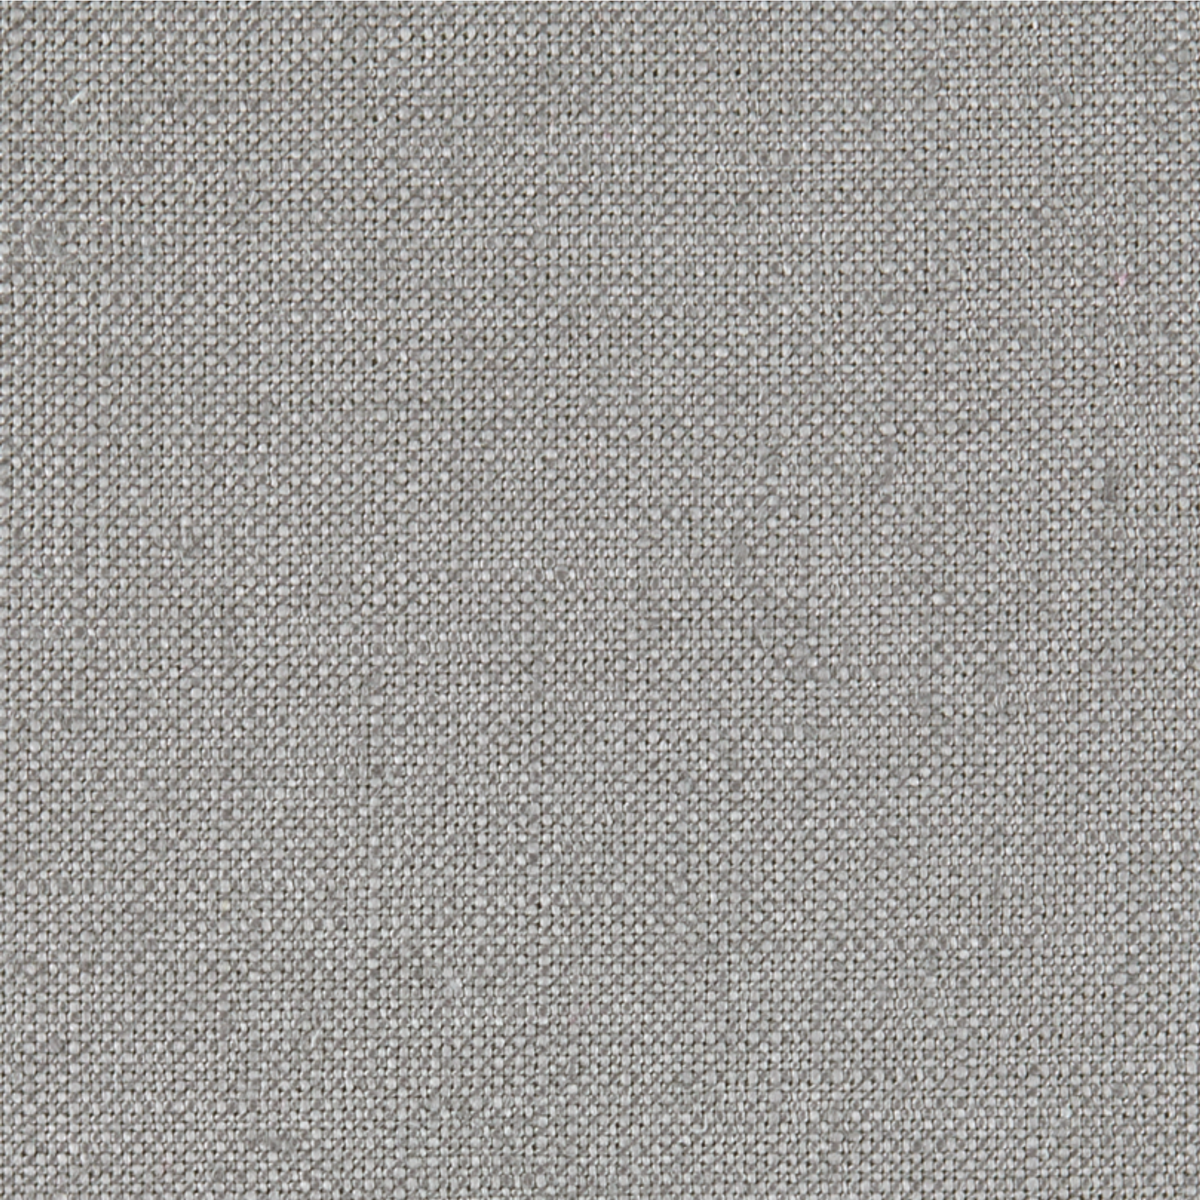 Swatch Sample of Grey Matouk Chelsea Linen Tissue Box Cover